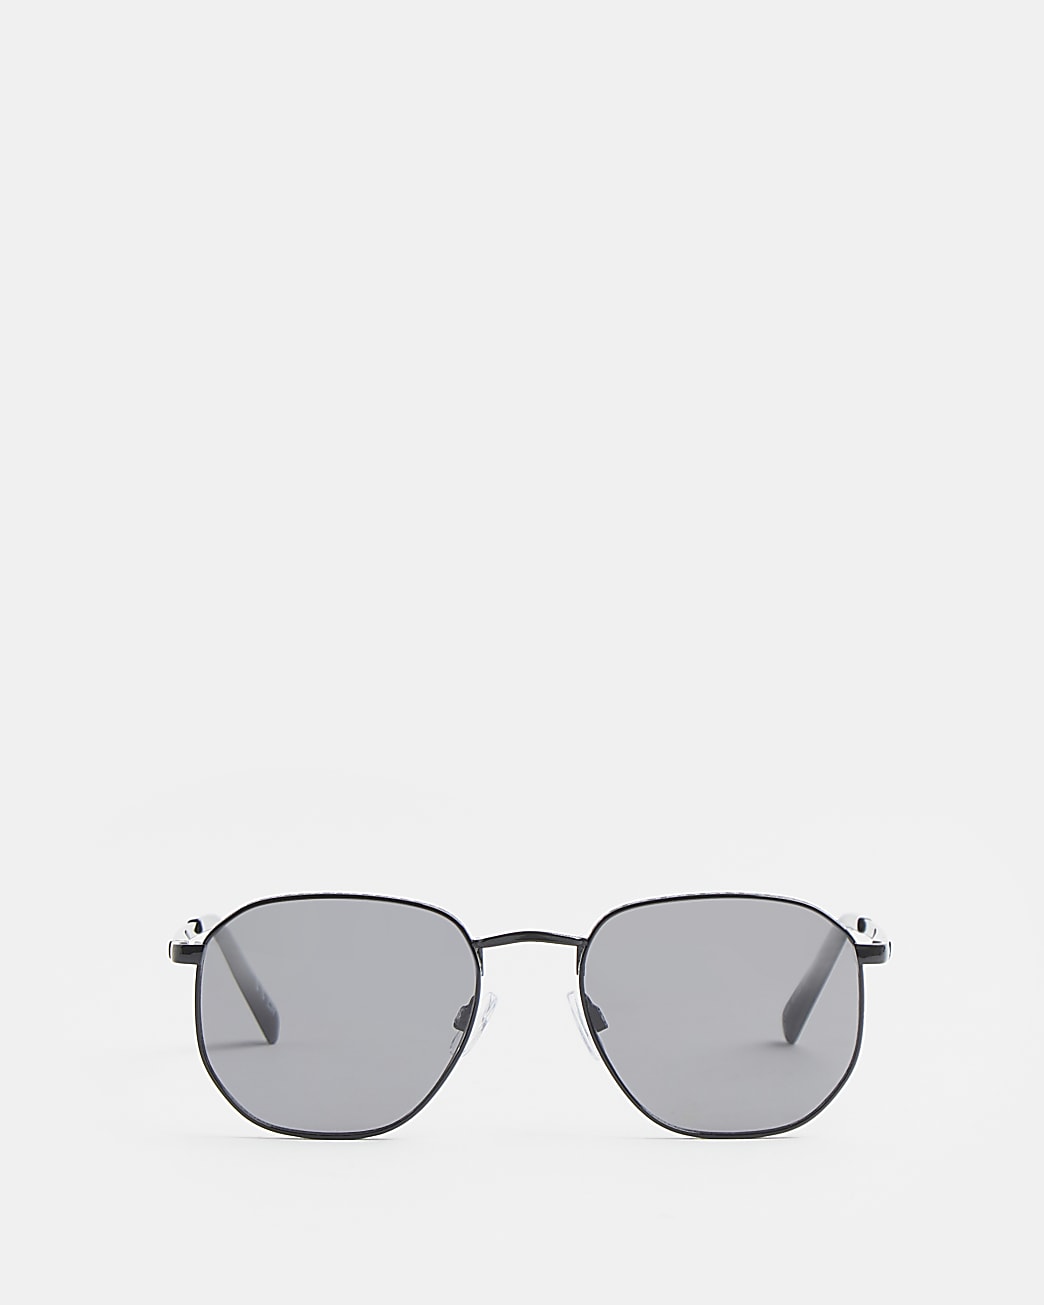 Black River embossed round frame sunglasses